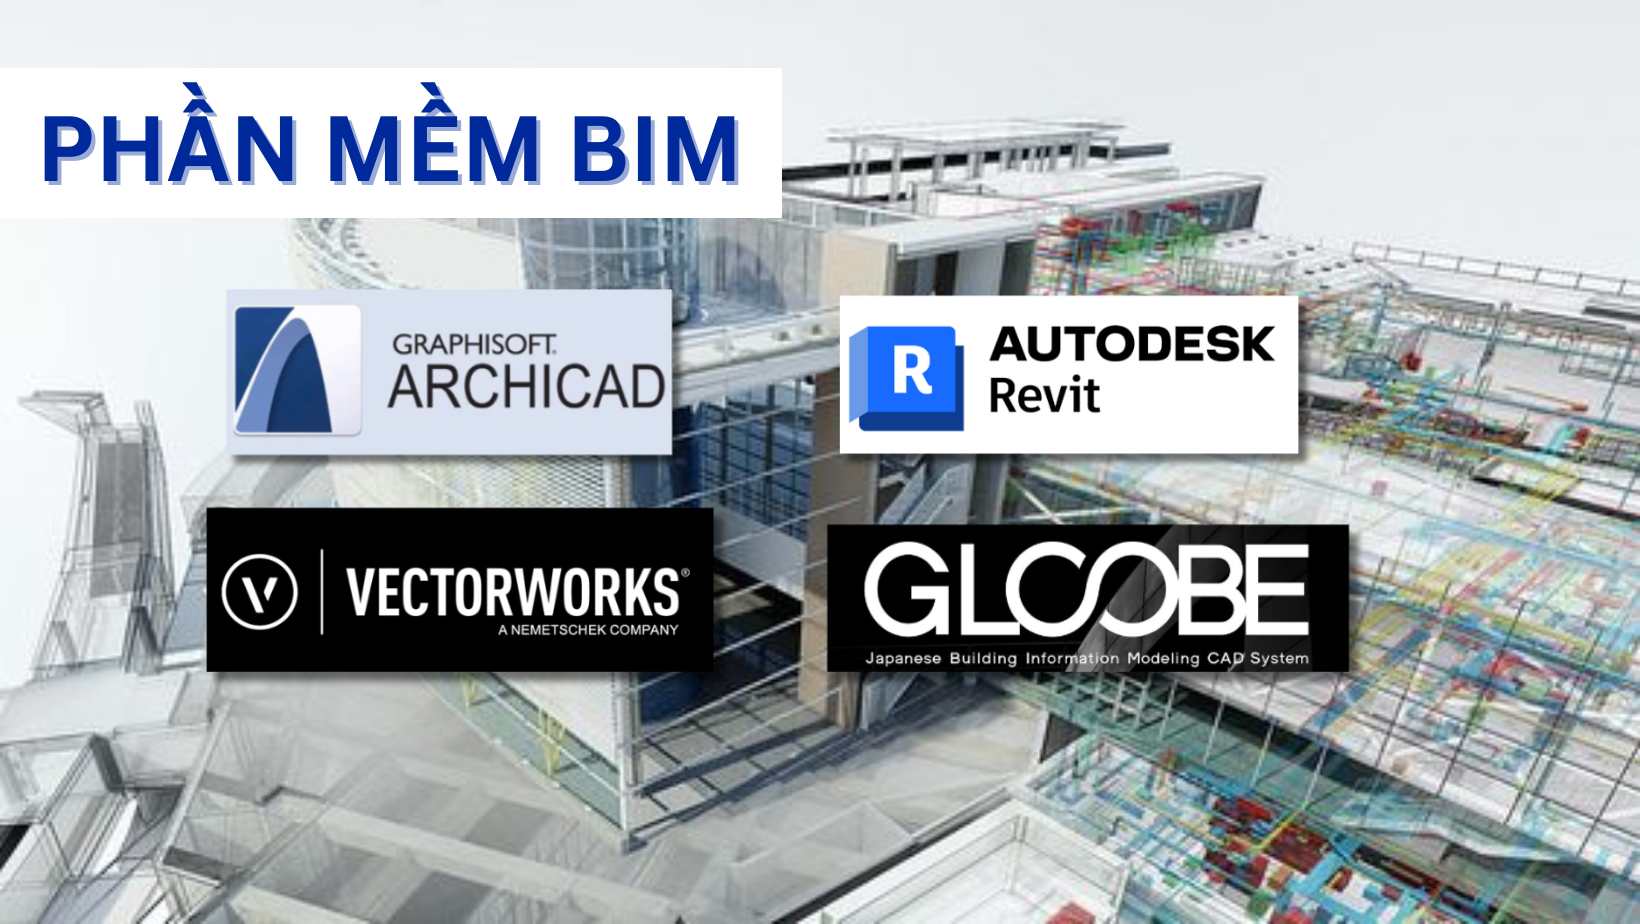 Phần mềm BIM: Archicad, Autodesk Revit, Gloobe, Vectorworks